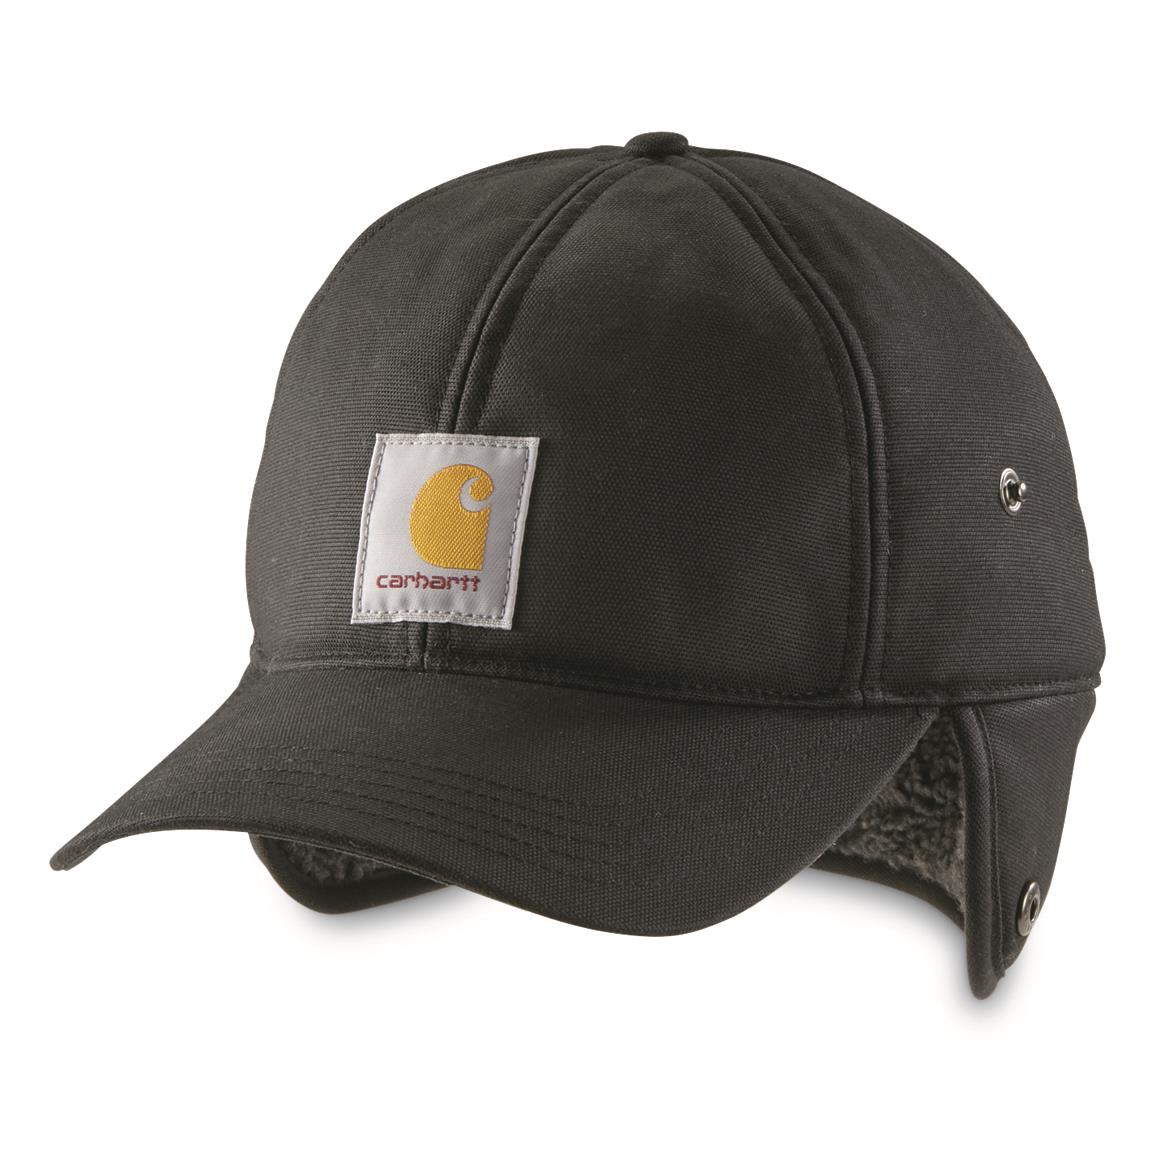 Carhartt Fleece Helmet Liner With Face Mask - 607671, Hats & Caps at ...